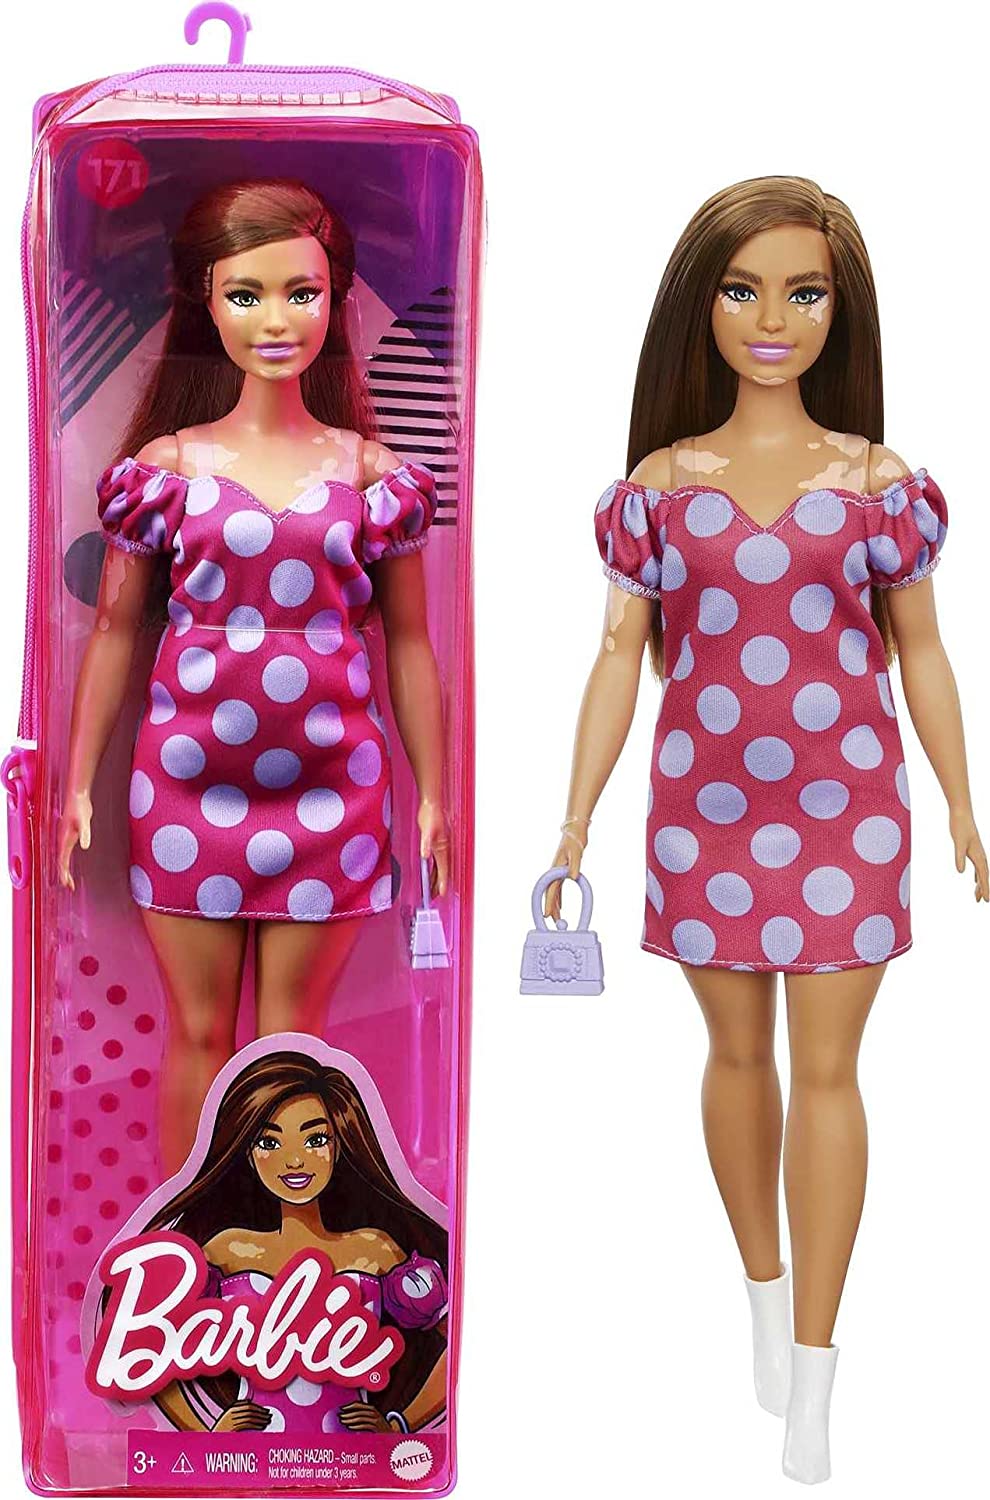 Barbie-Puppe Nr. 171